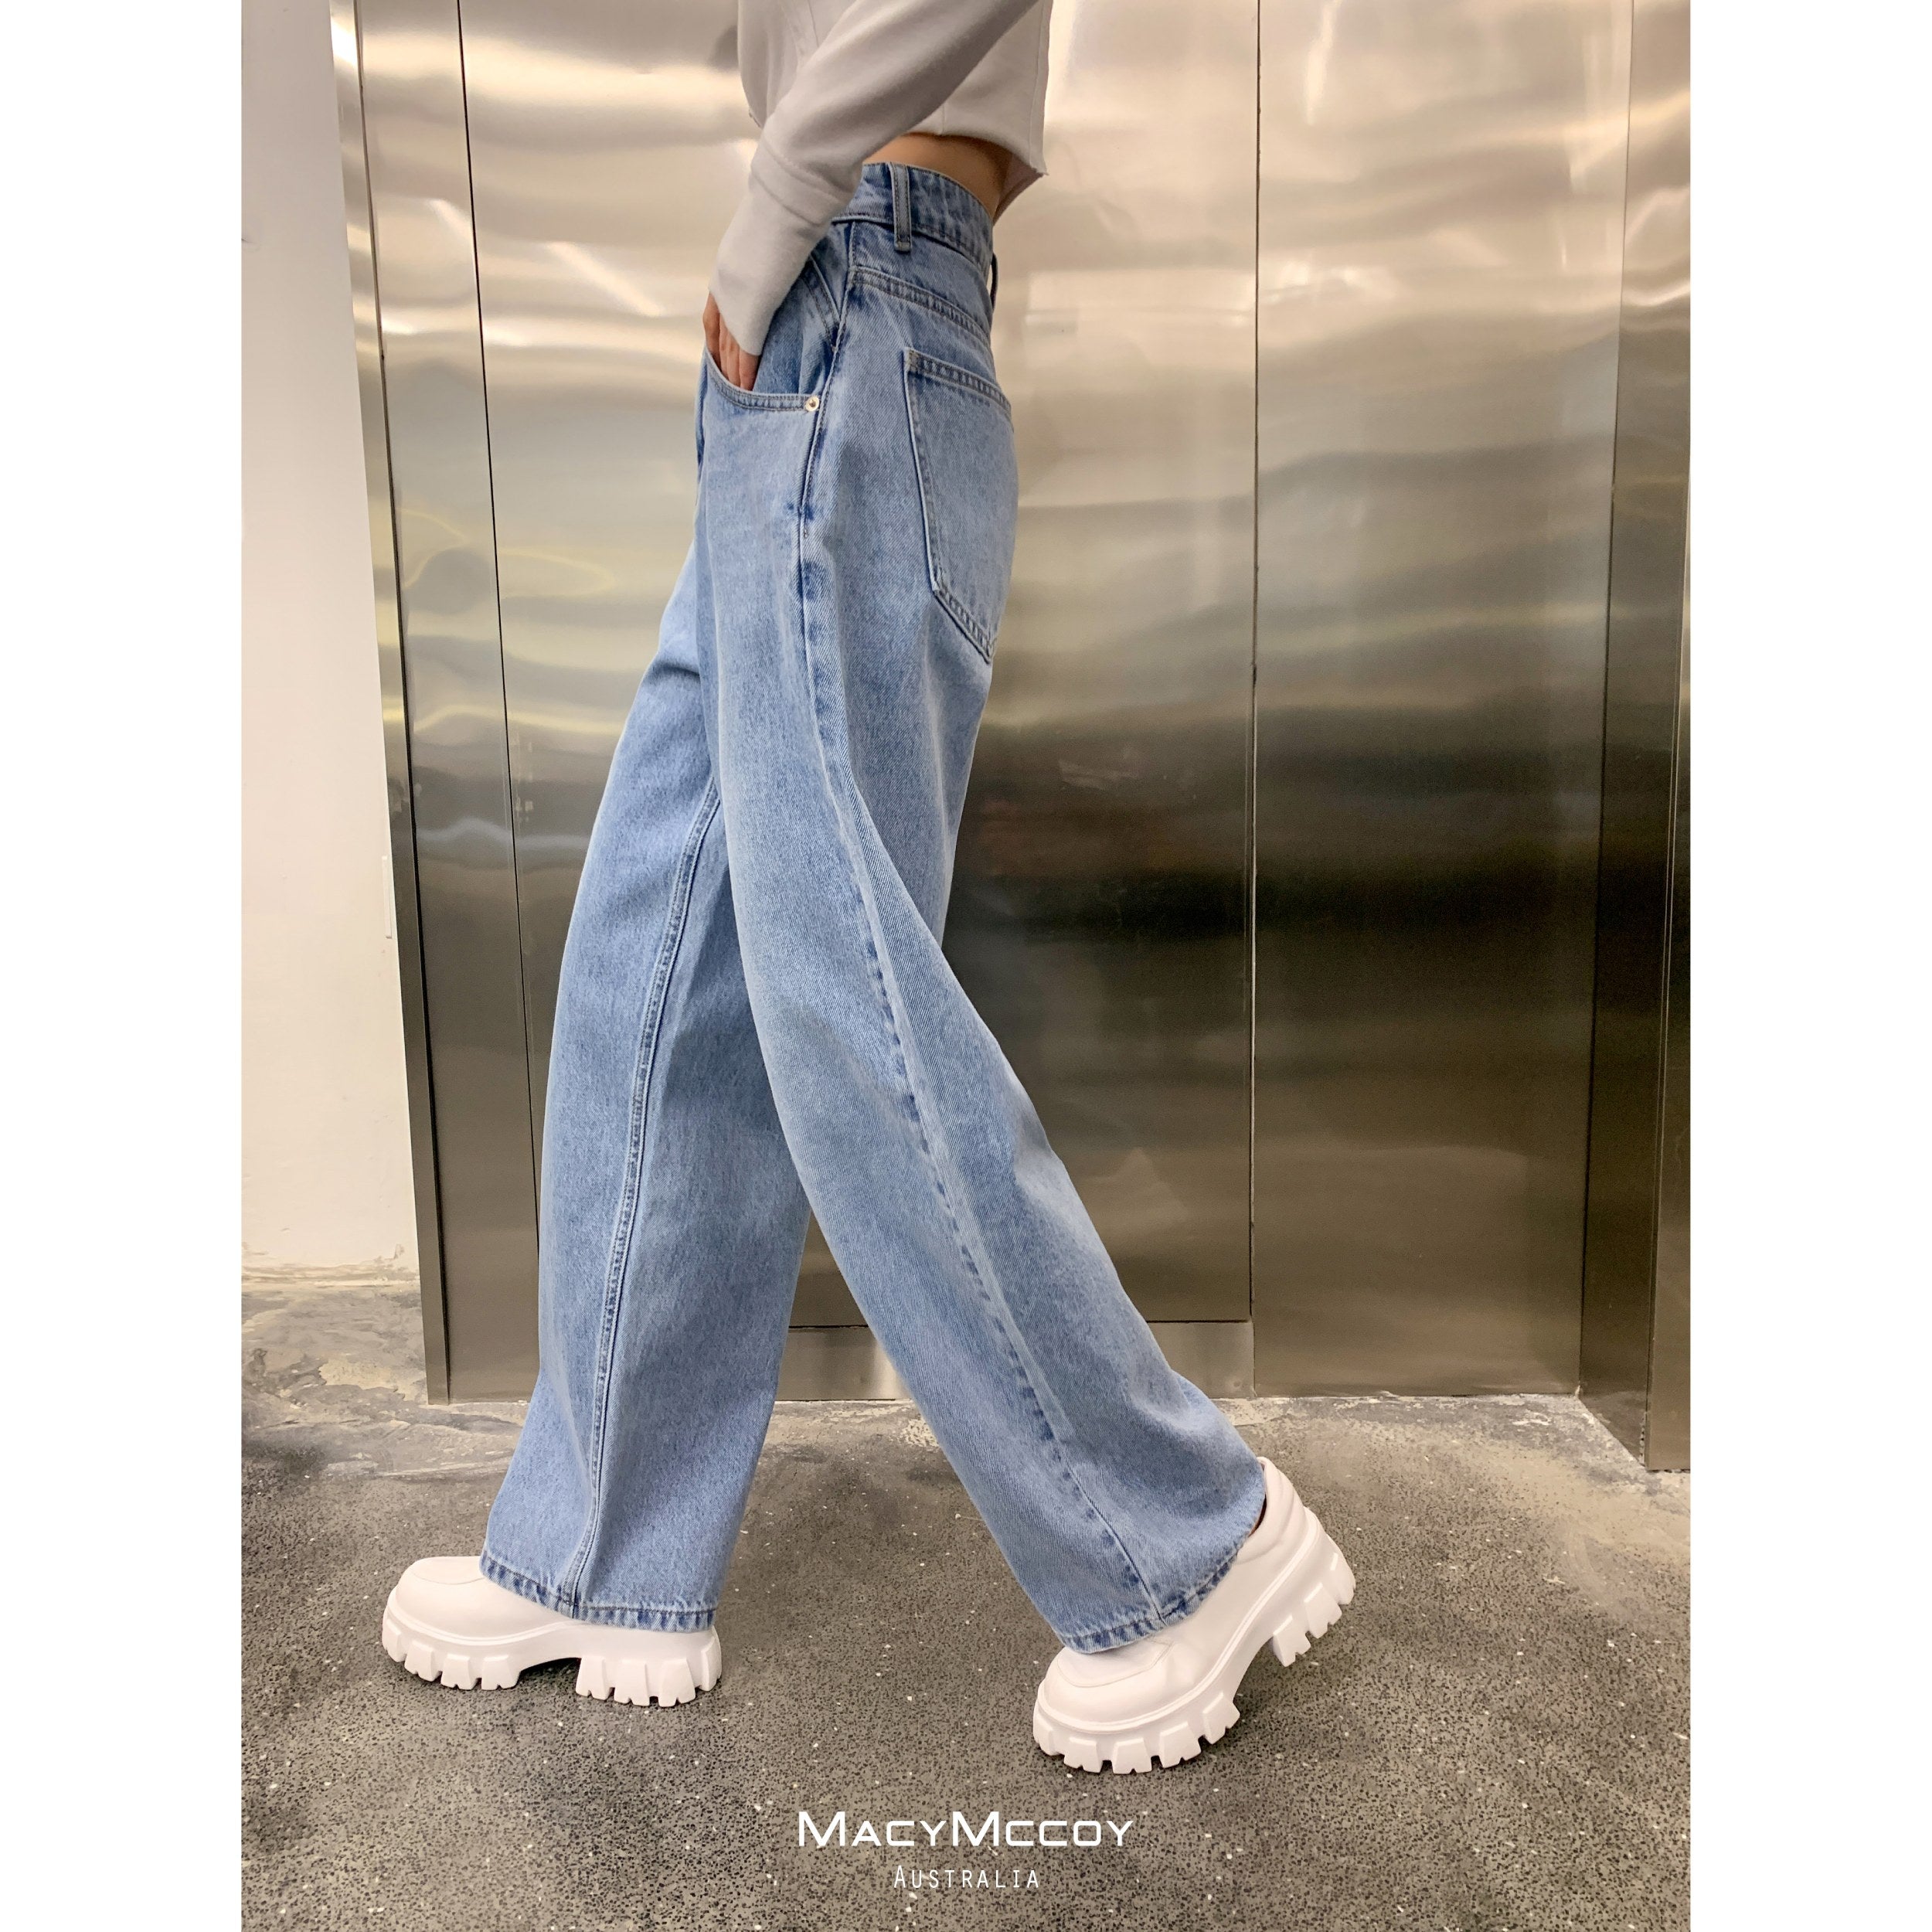 MacyMccoy Oversize Washed Denim Jeans